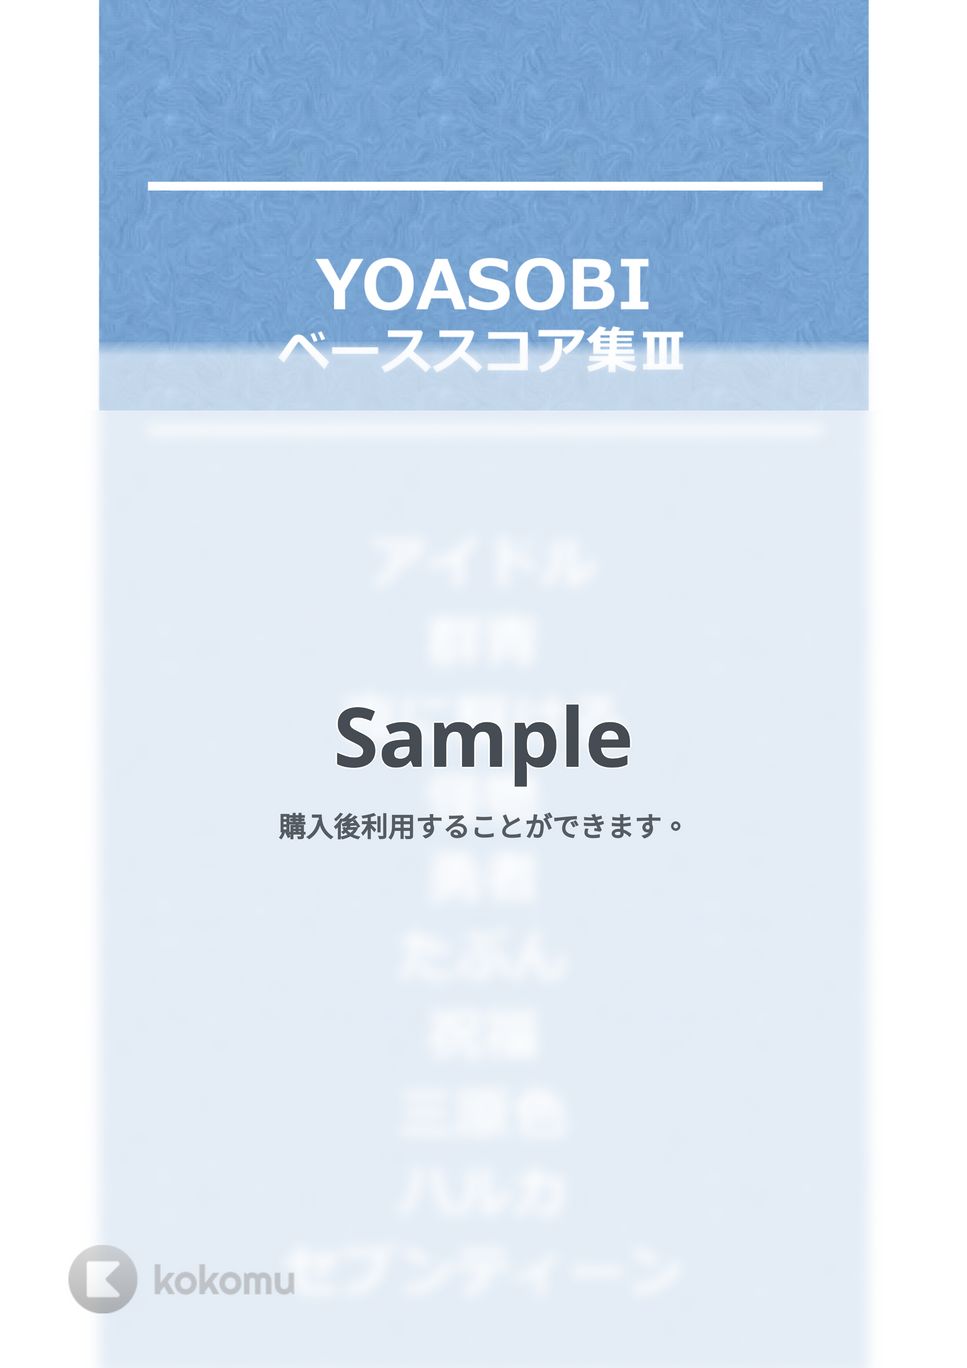 YOASOBI - YOASOBI ベースTAB譜面10曲セット集Ⅰ by たぶべー